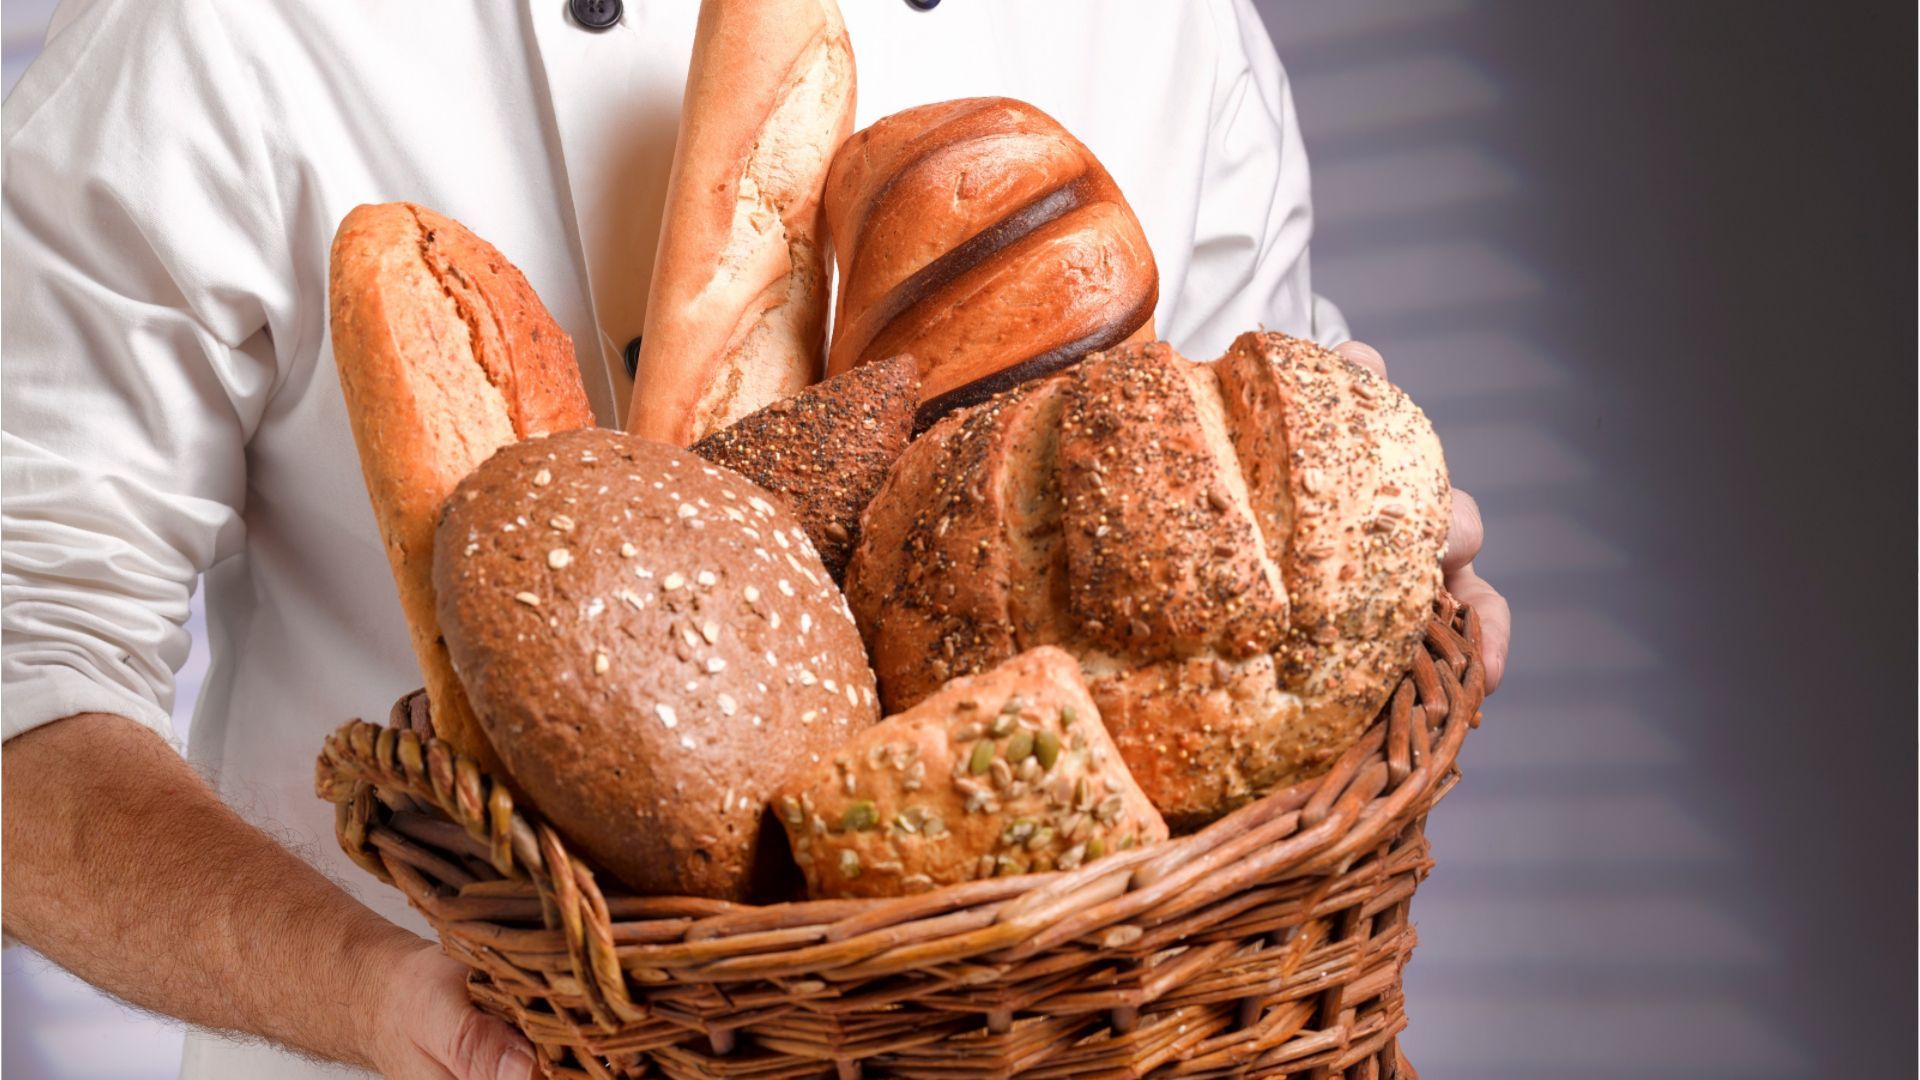 Verdacht auf Metallspäne - Bäckerei ruft Backwaren zurück